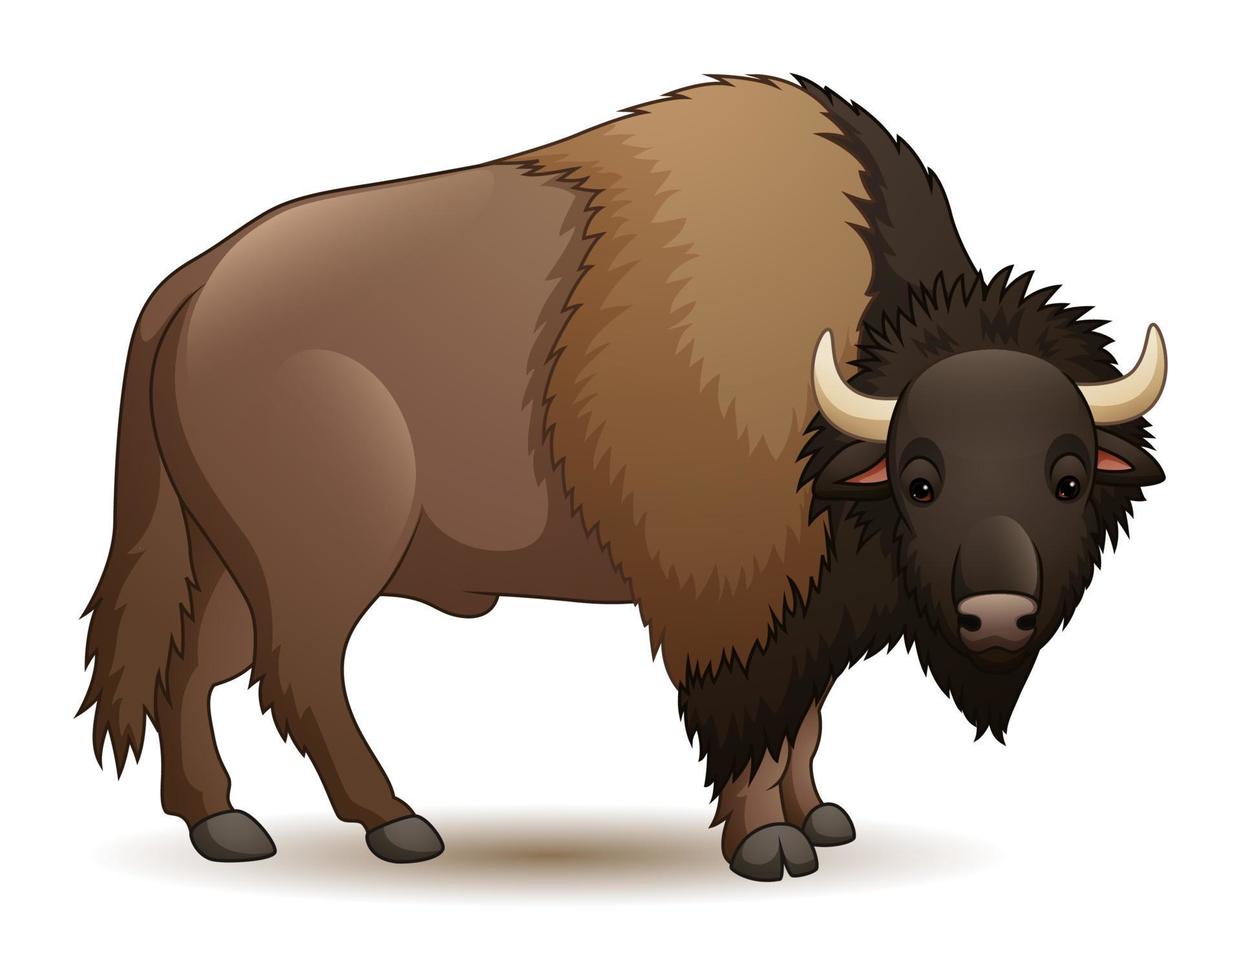 tecknad bison isolerad på vit bakgrund vektor